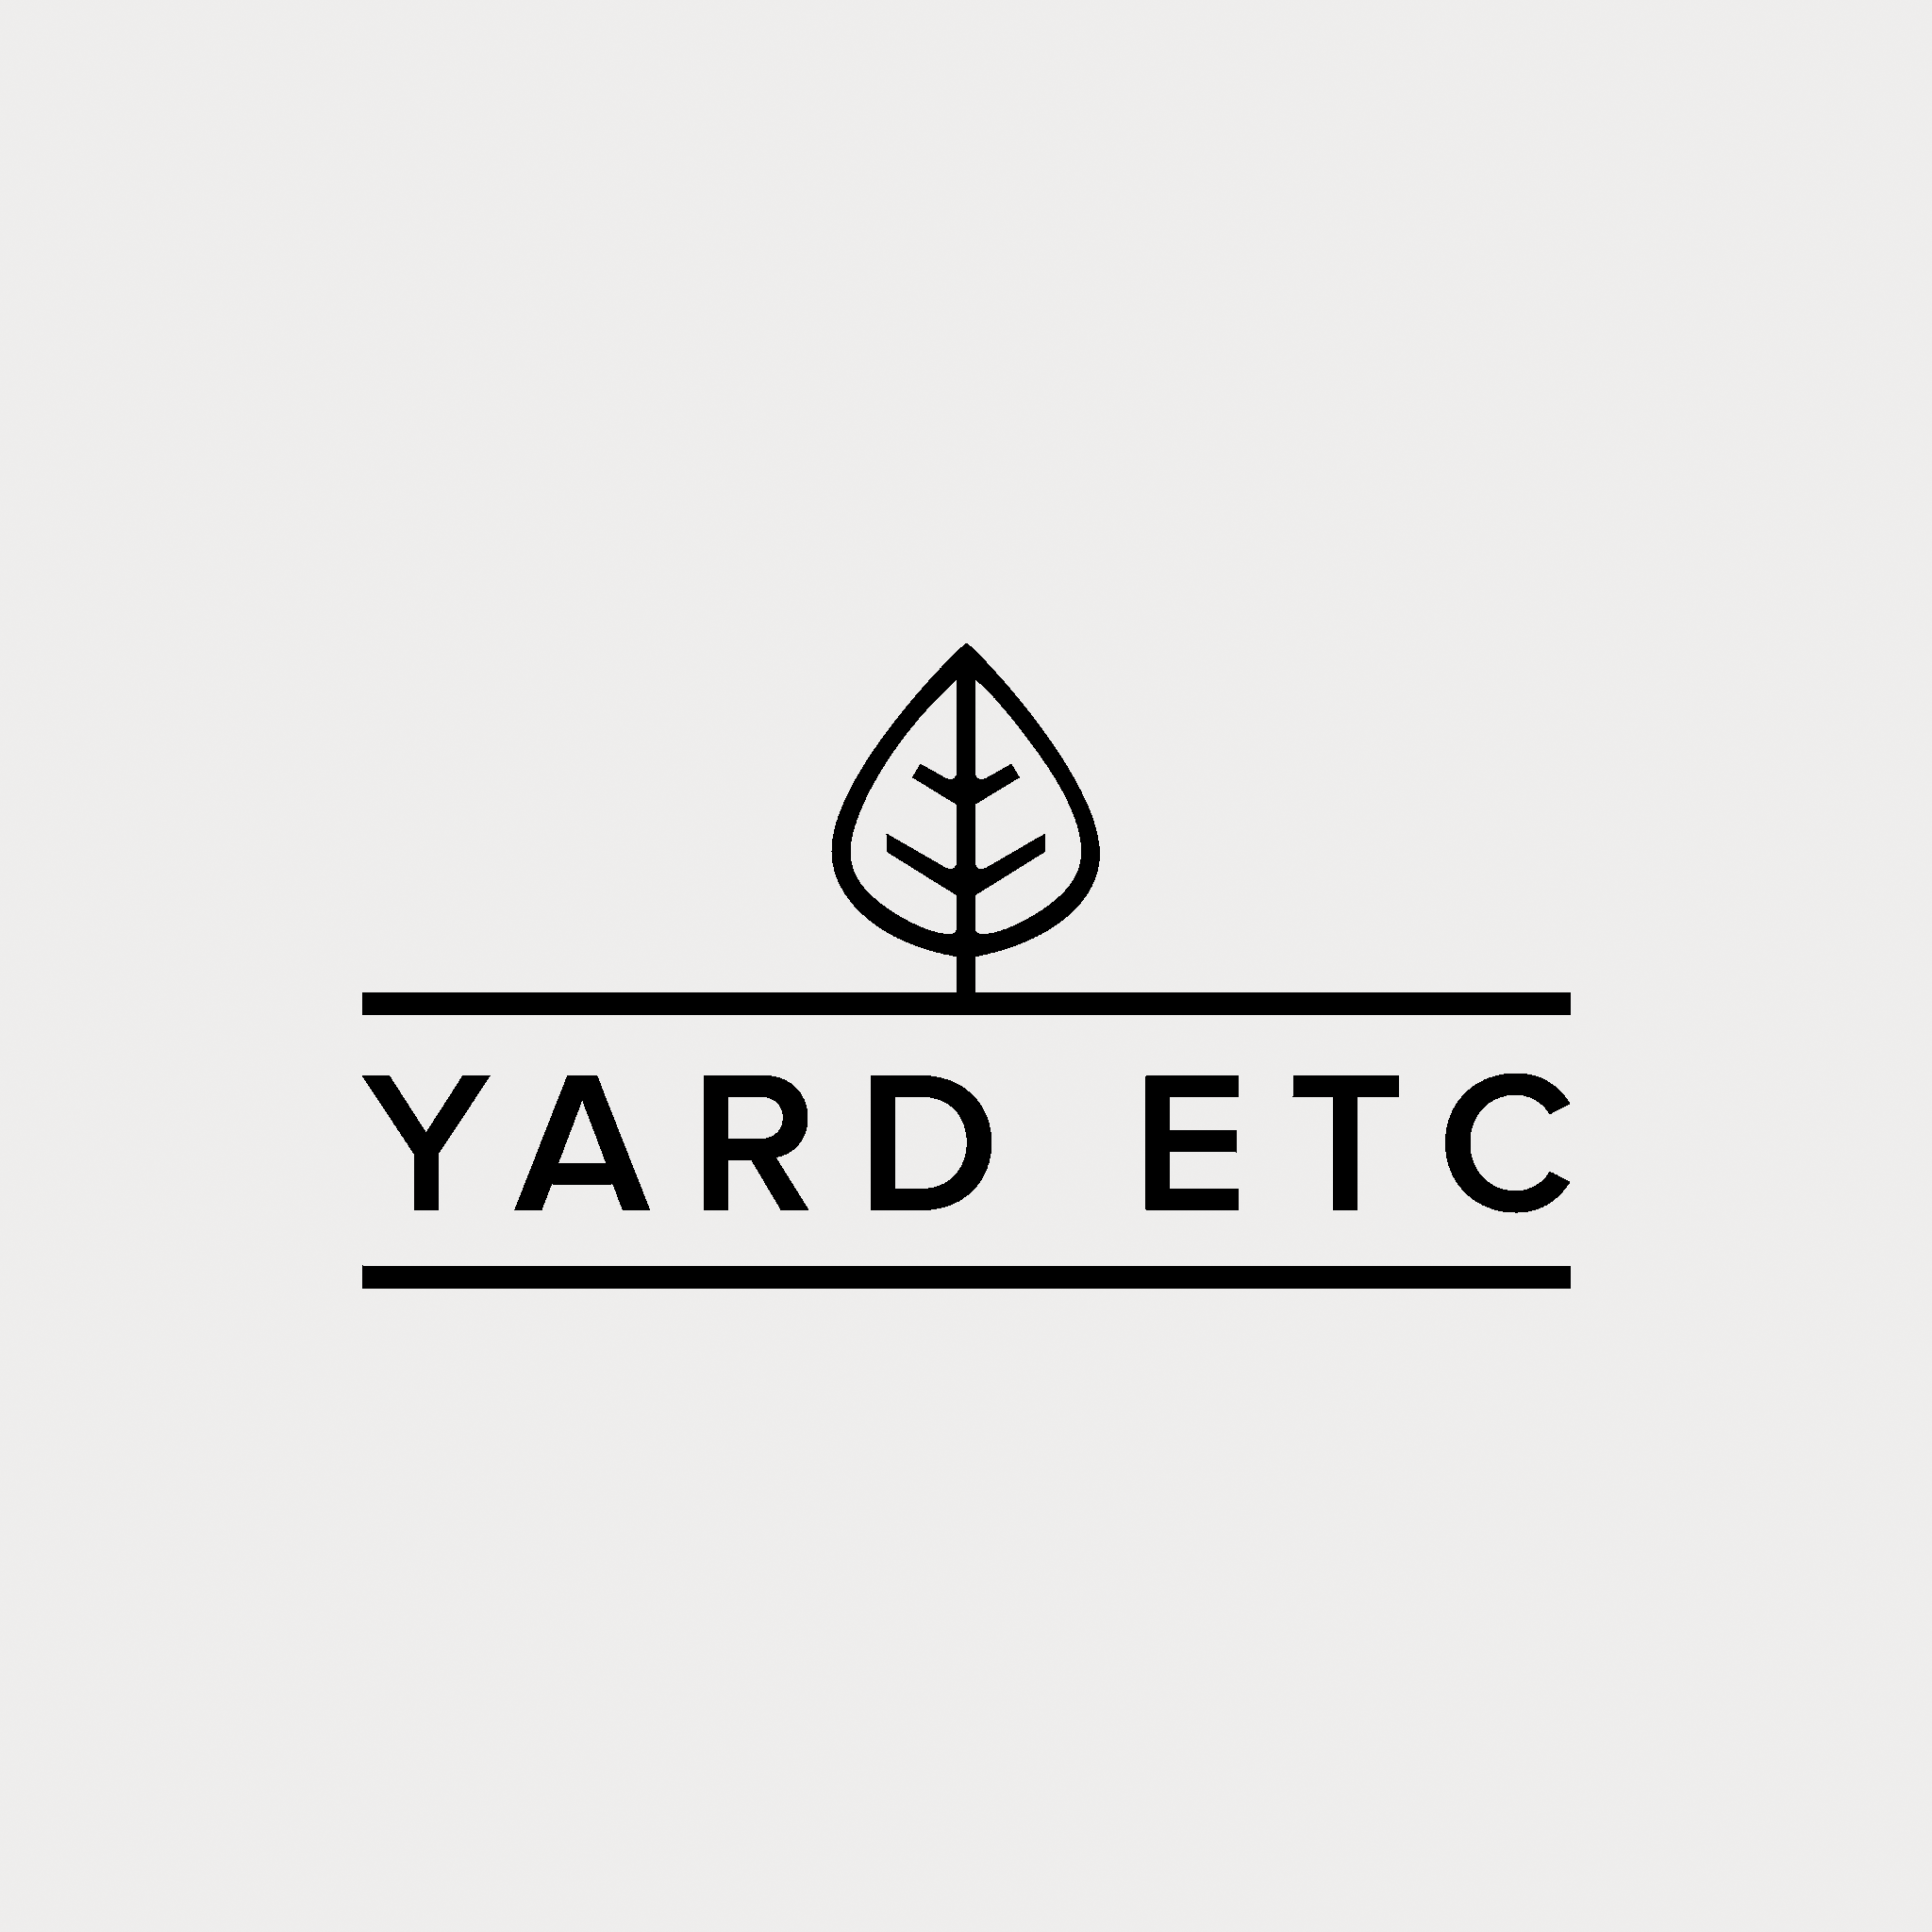 Yard Etc